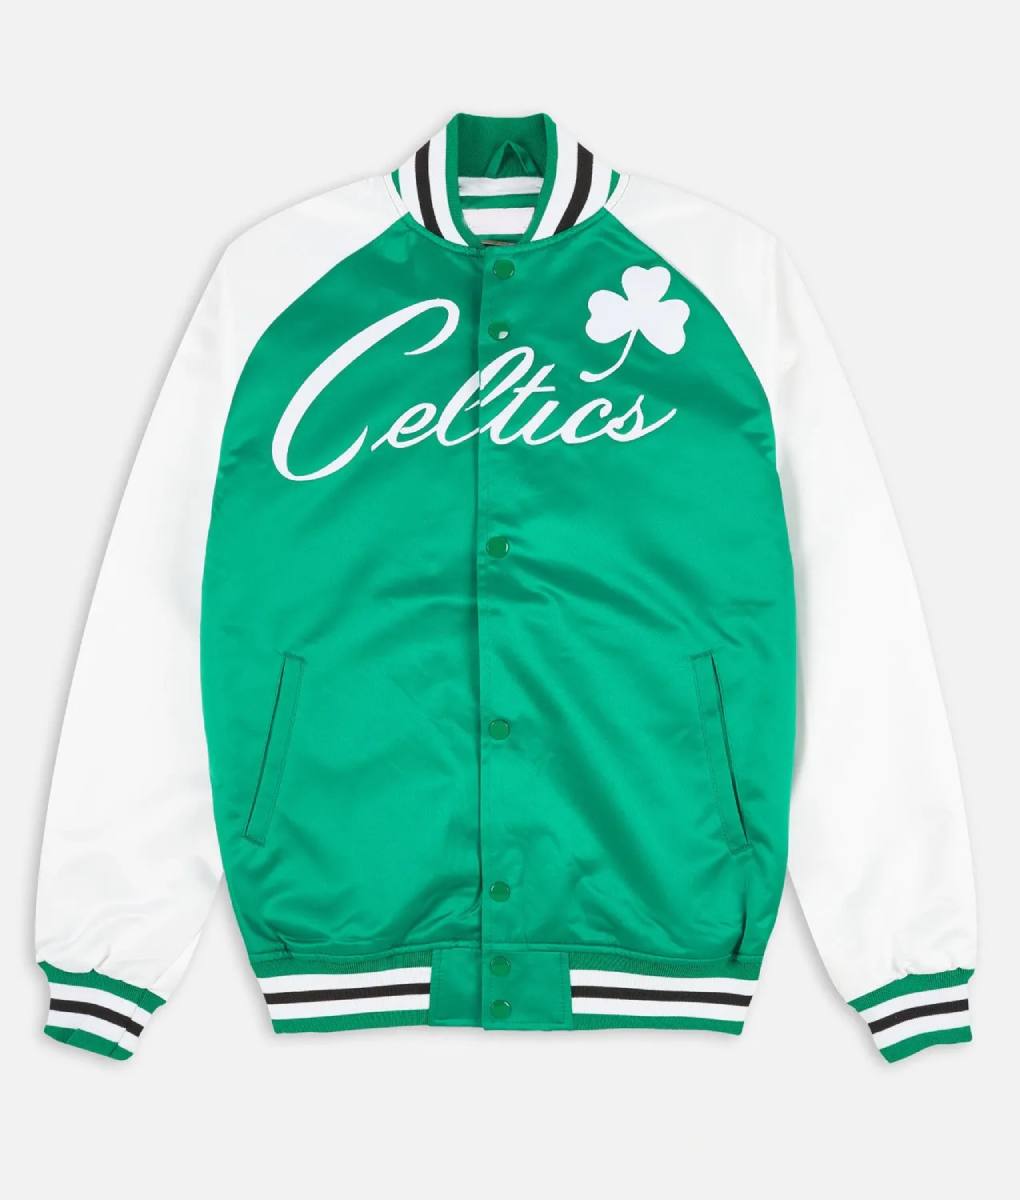 Boston Celtics Green and White Jacket (4)